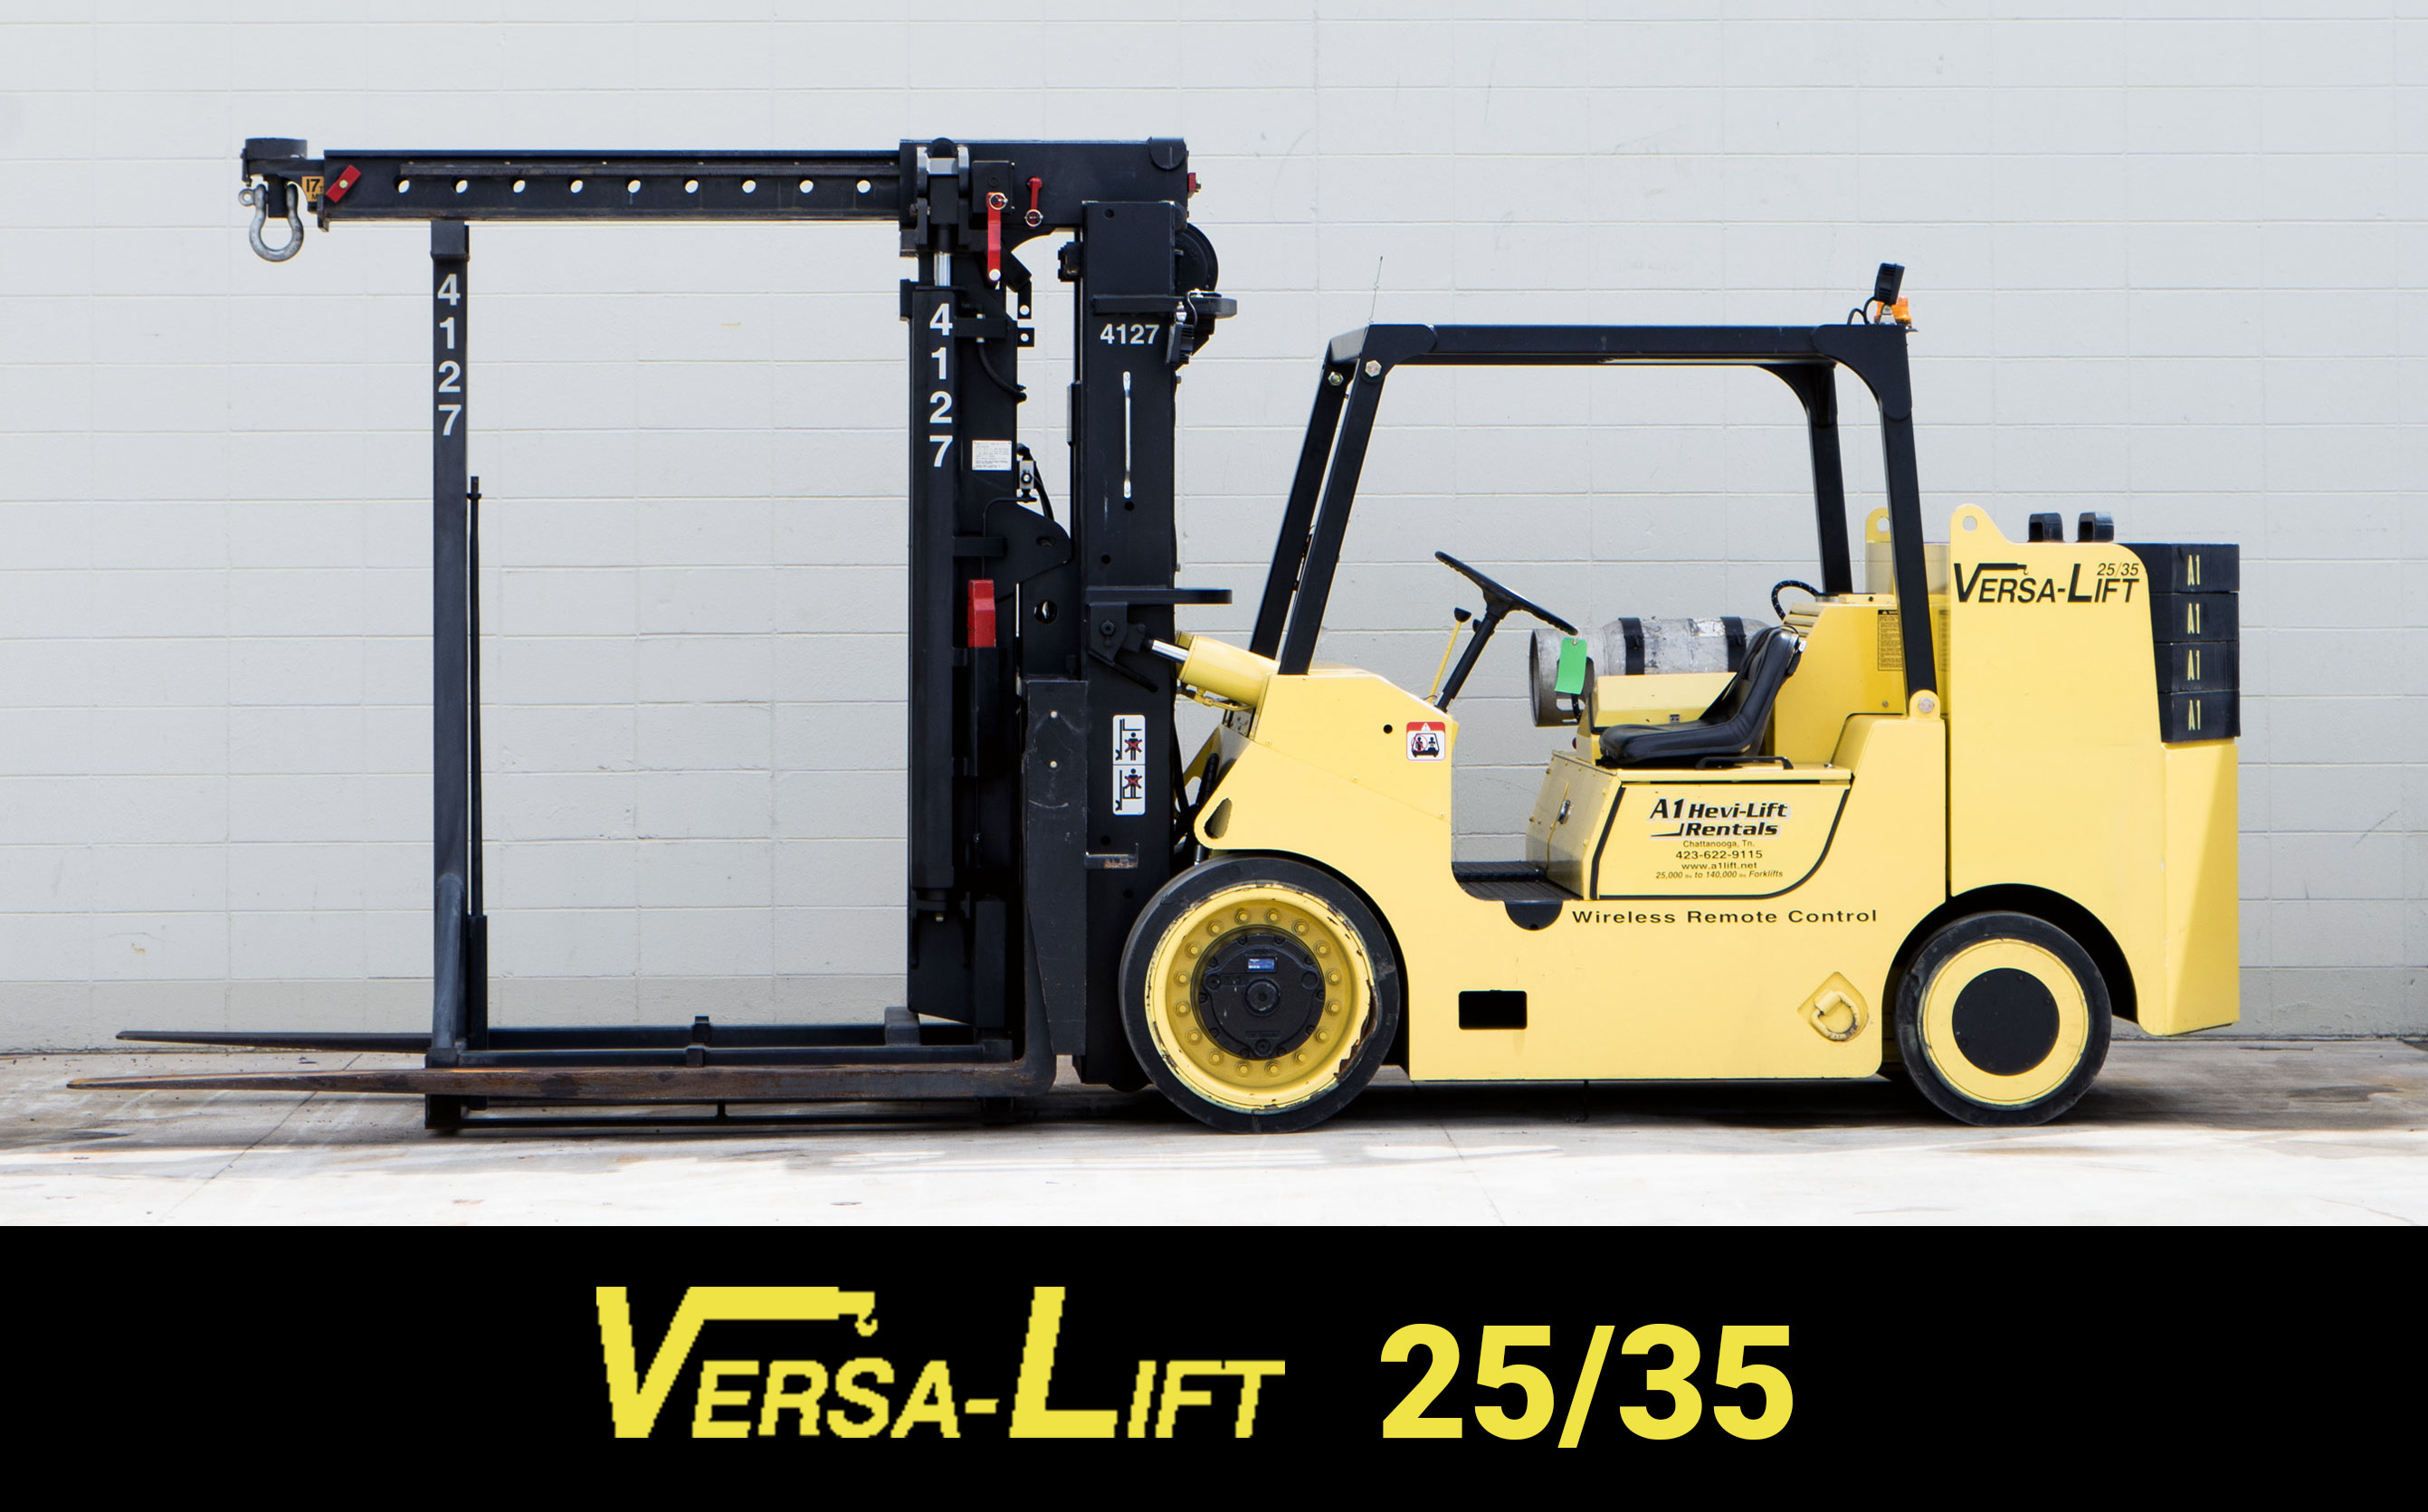 Versa-Lift 25/35 Forklift Rental